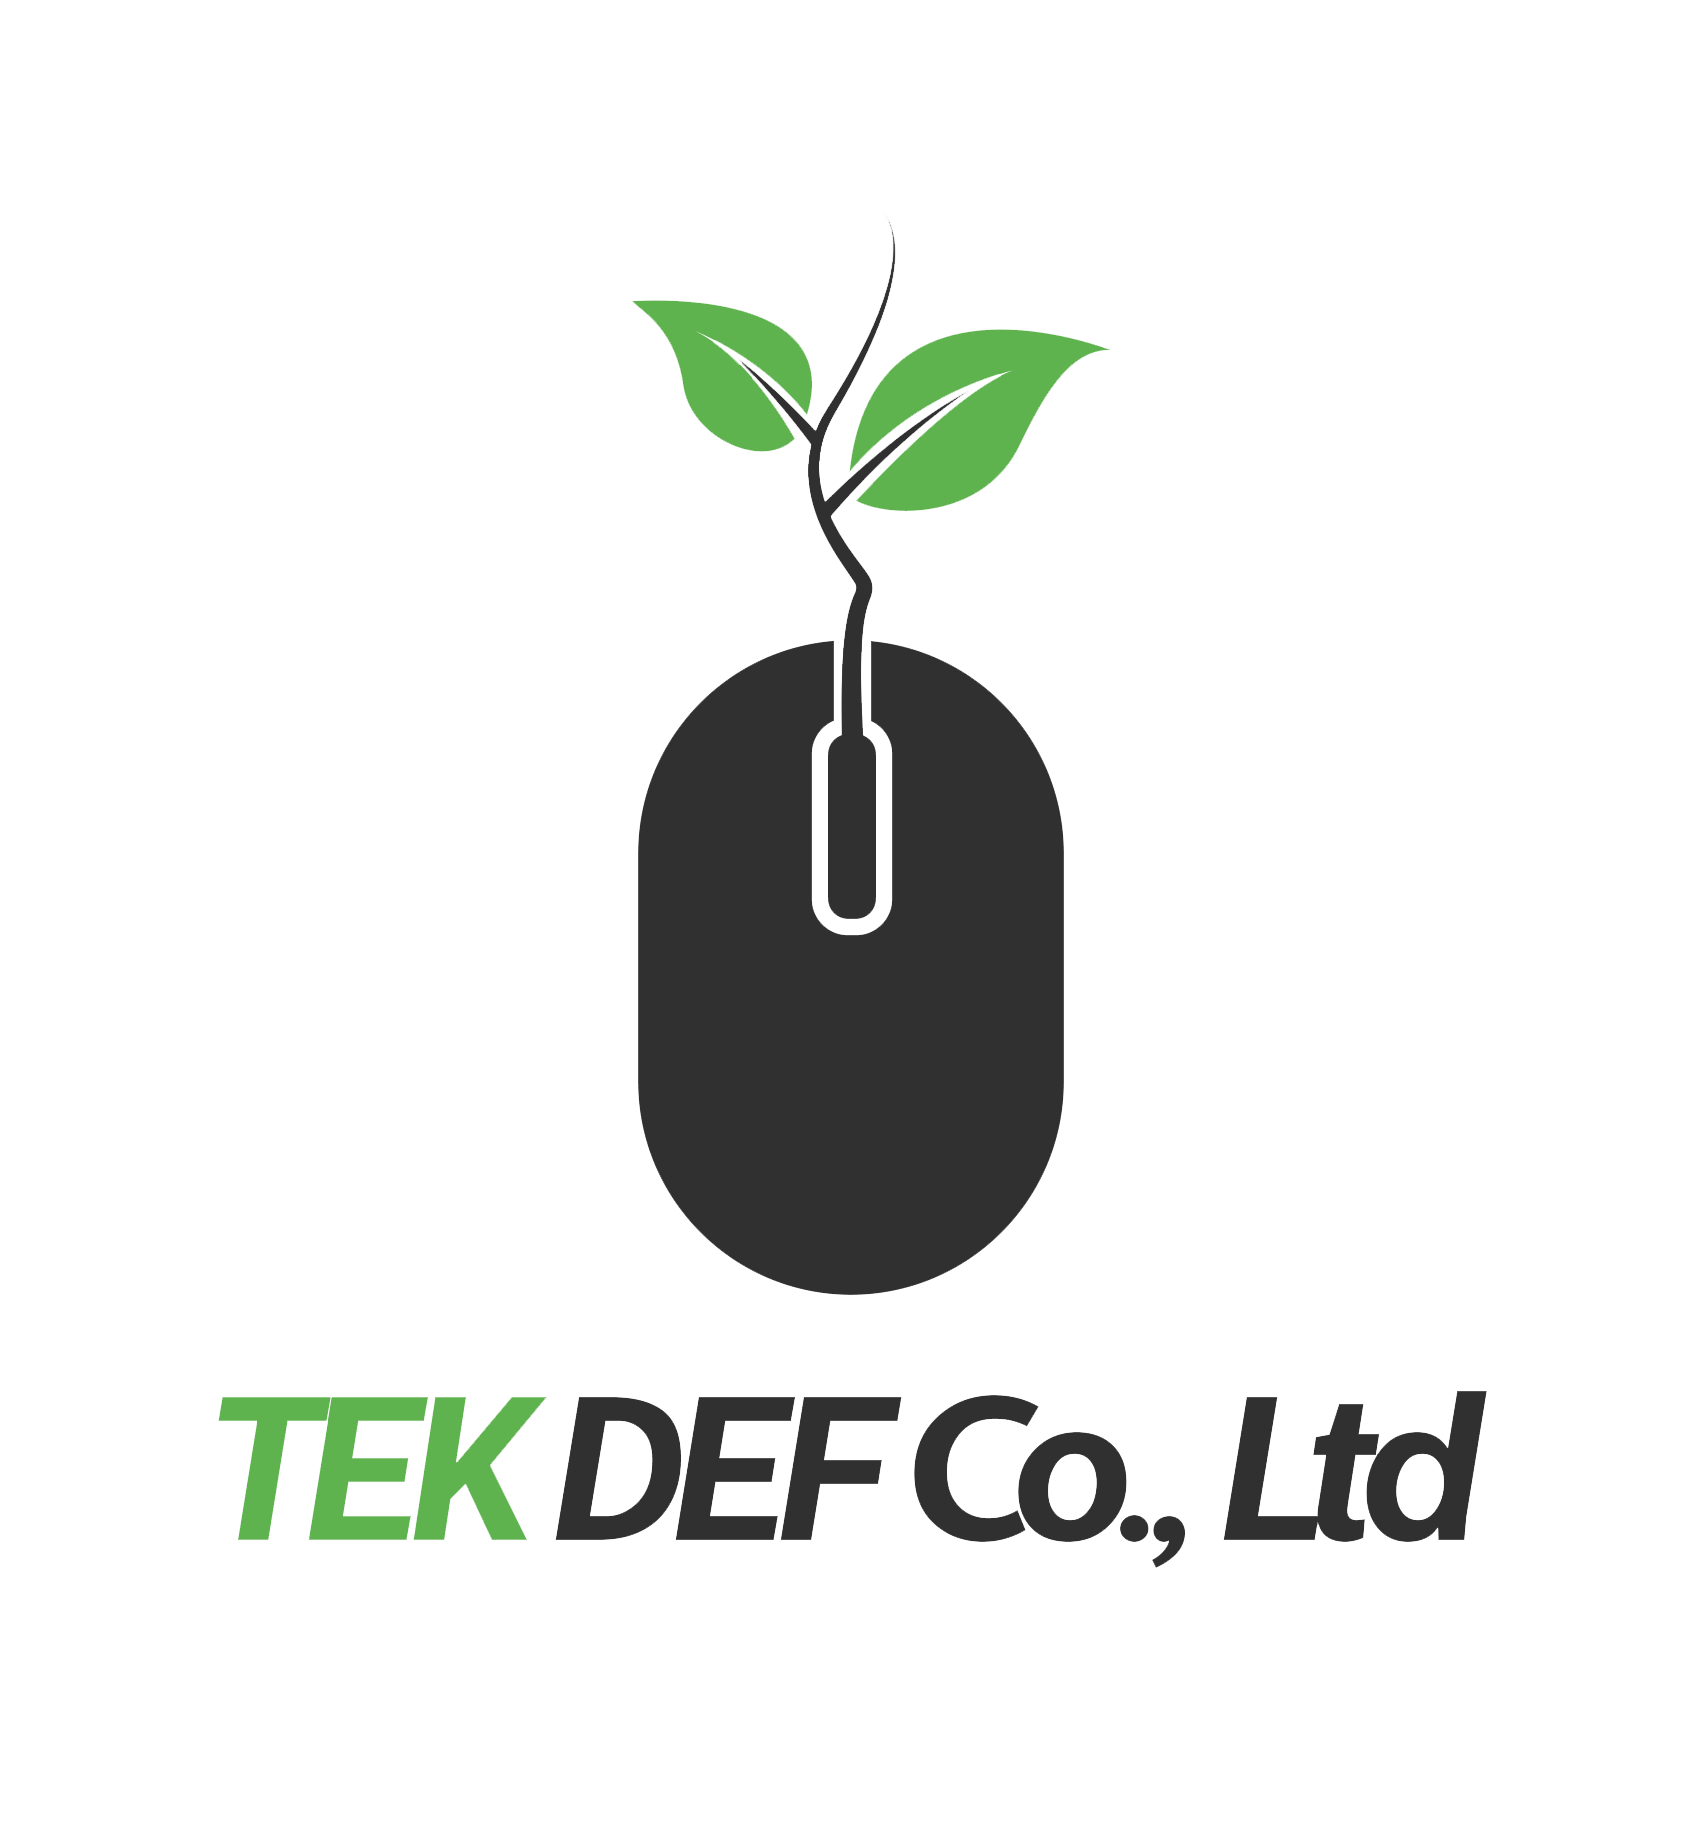 TEK DEF Co., LTD